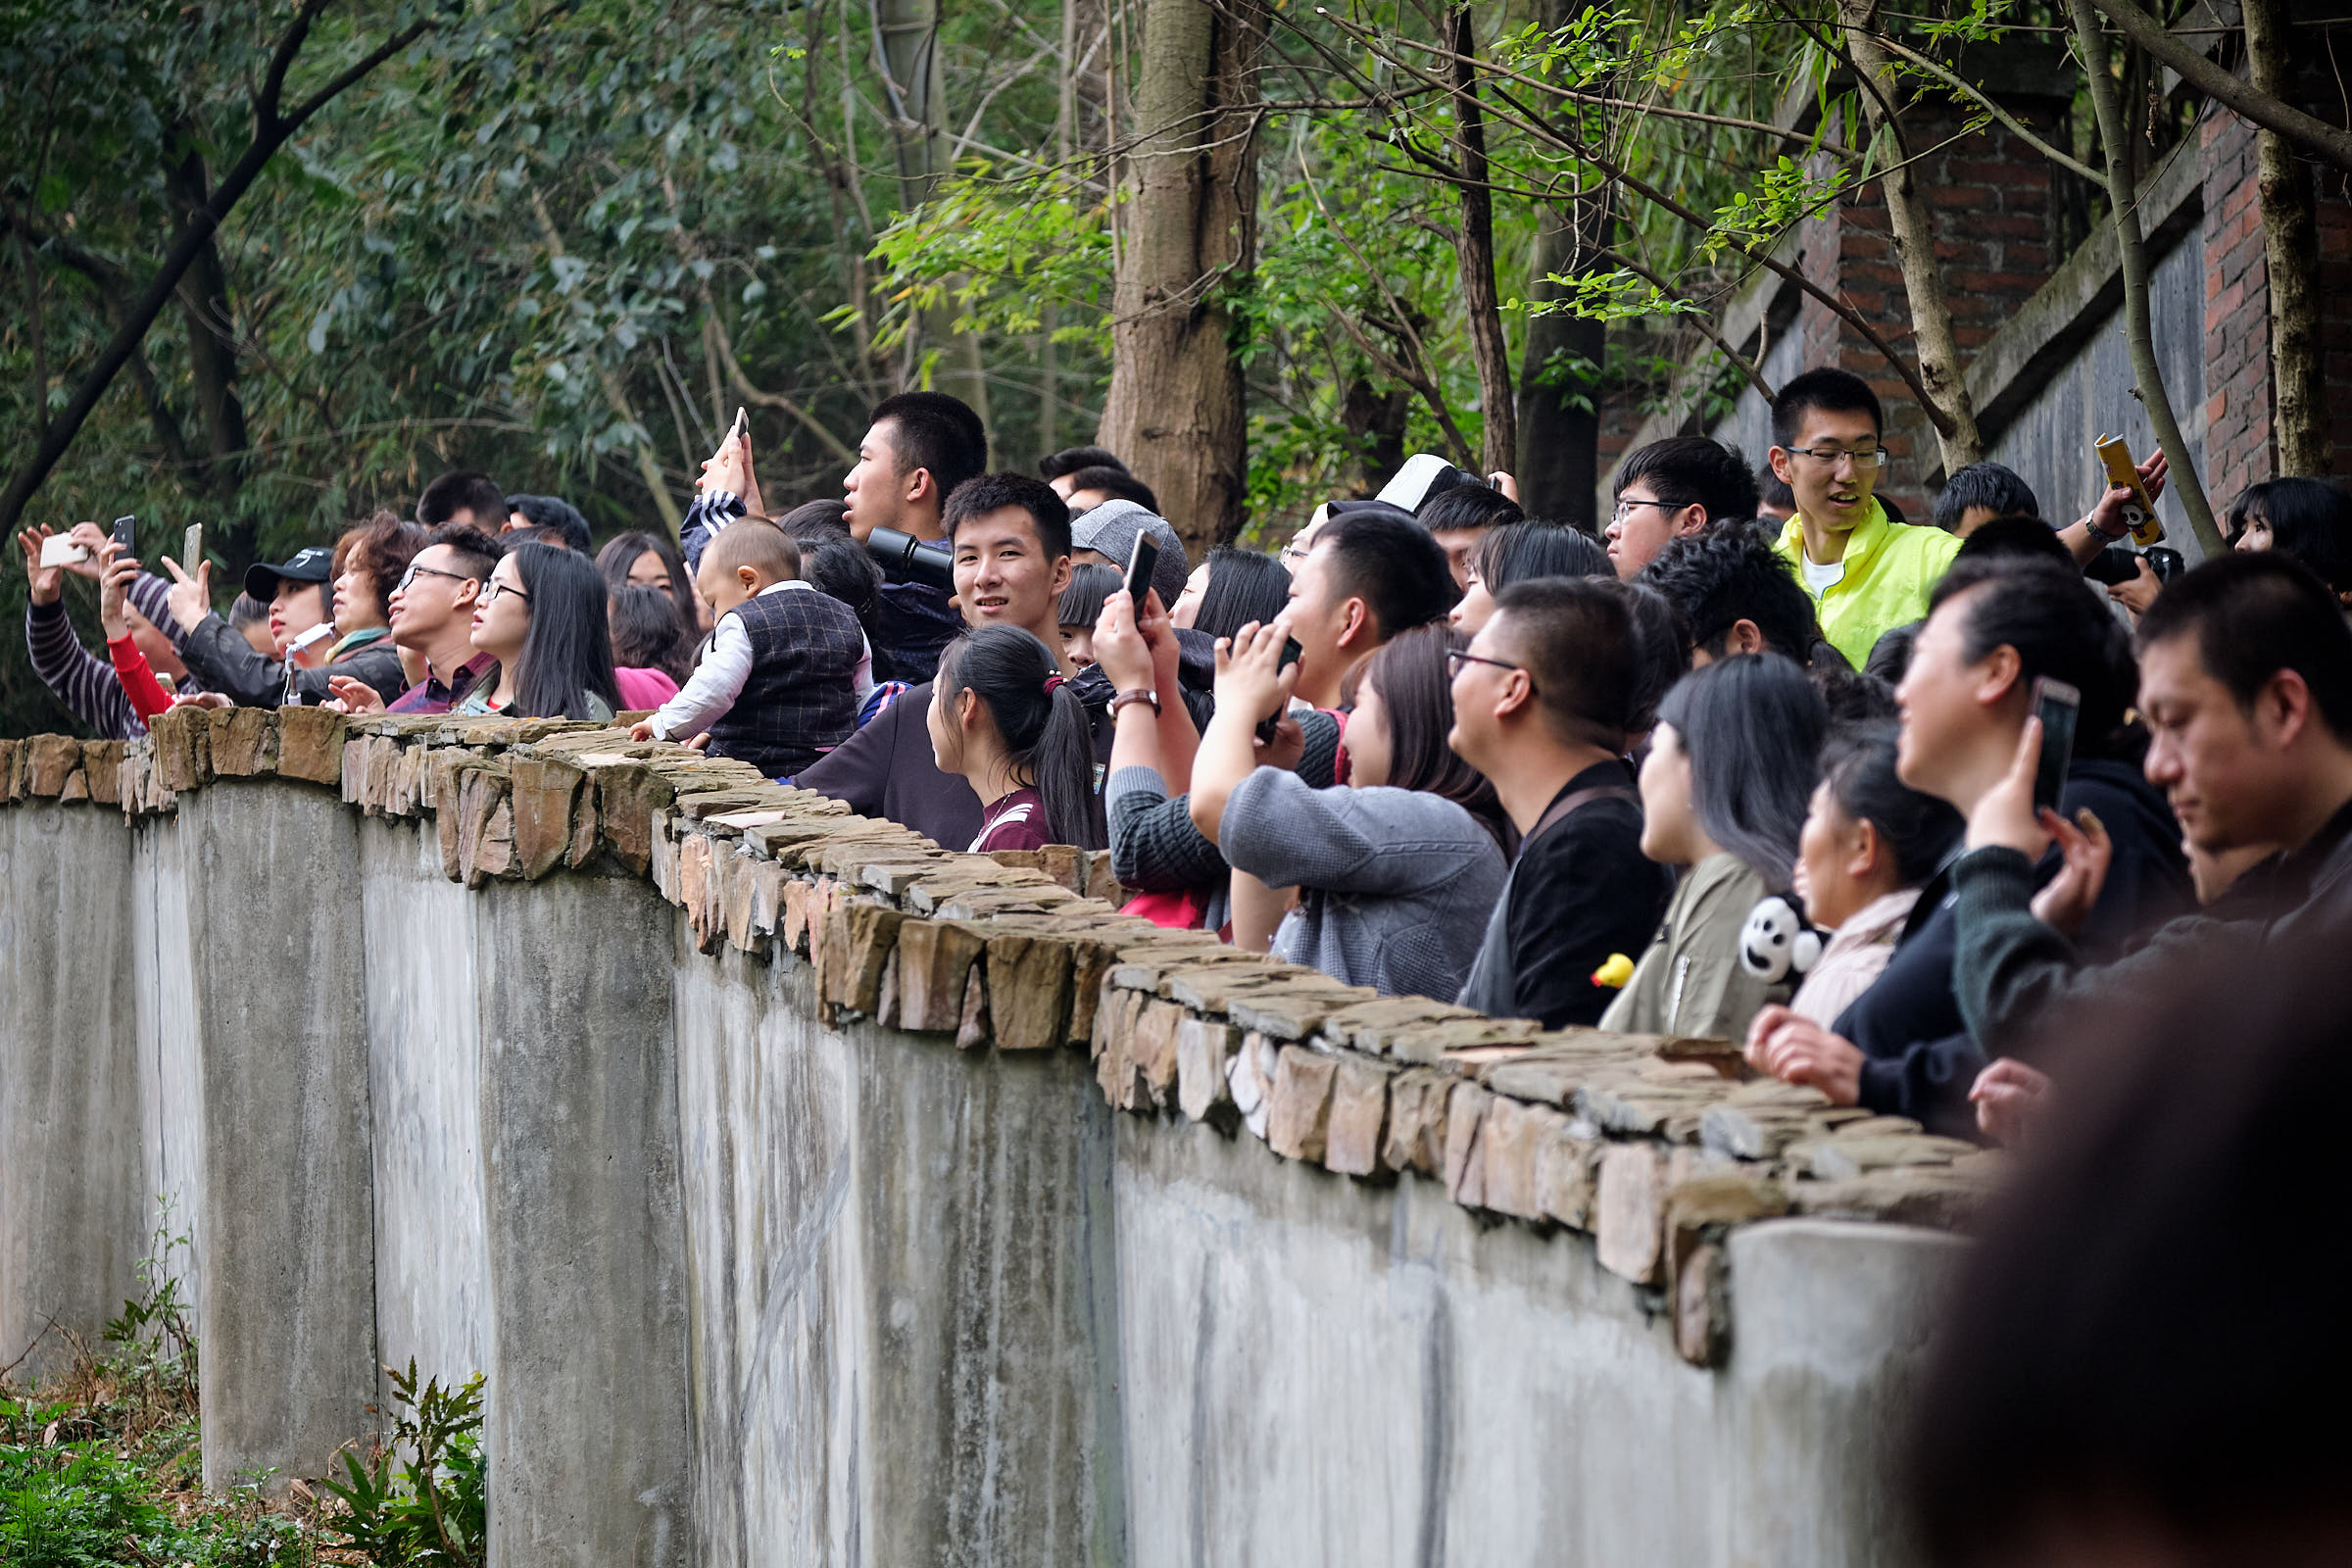 Crowds at Chengdu Panda Reserve